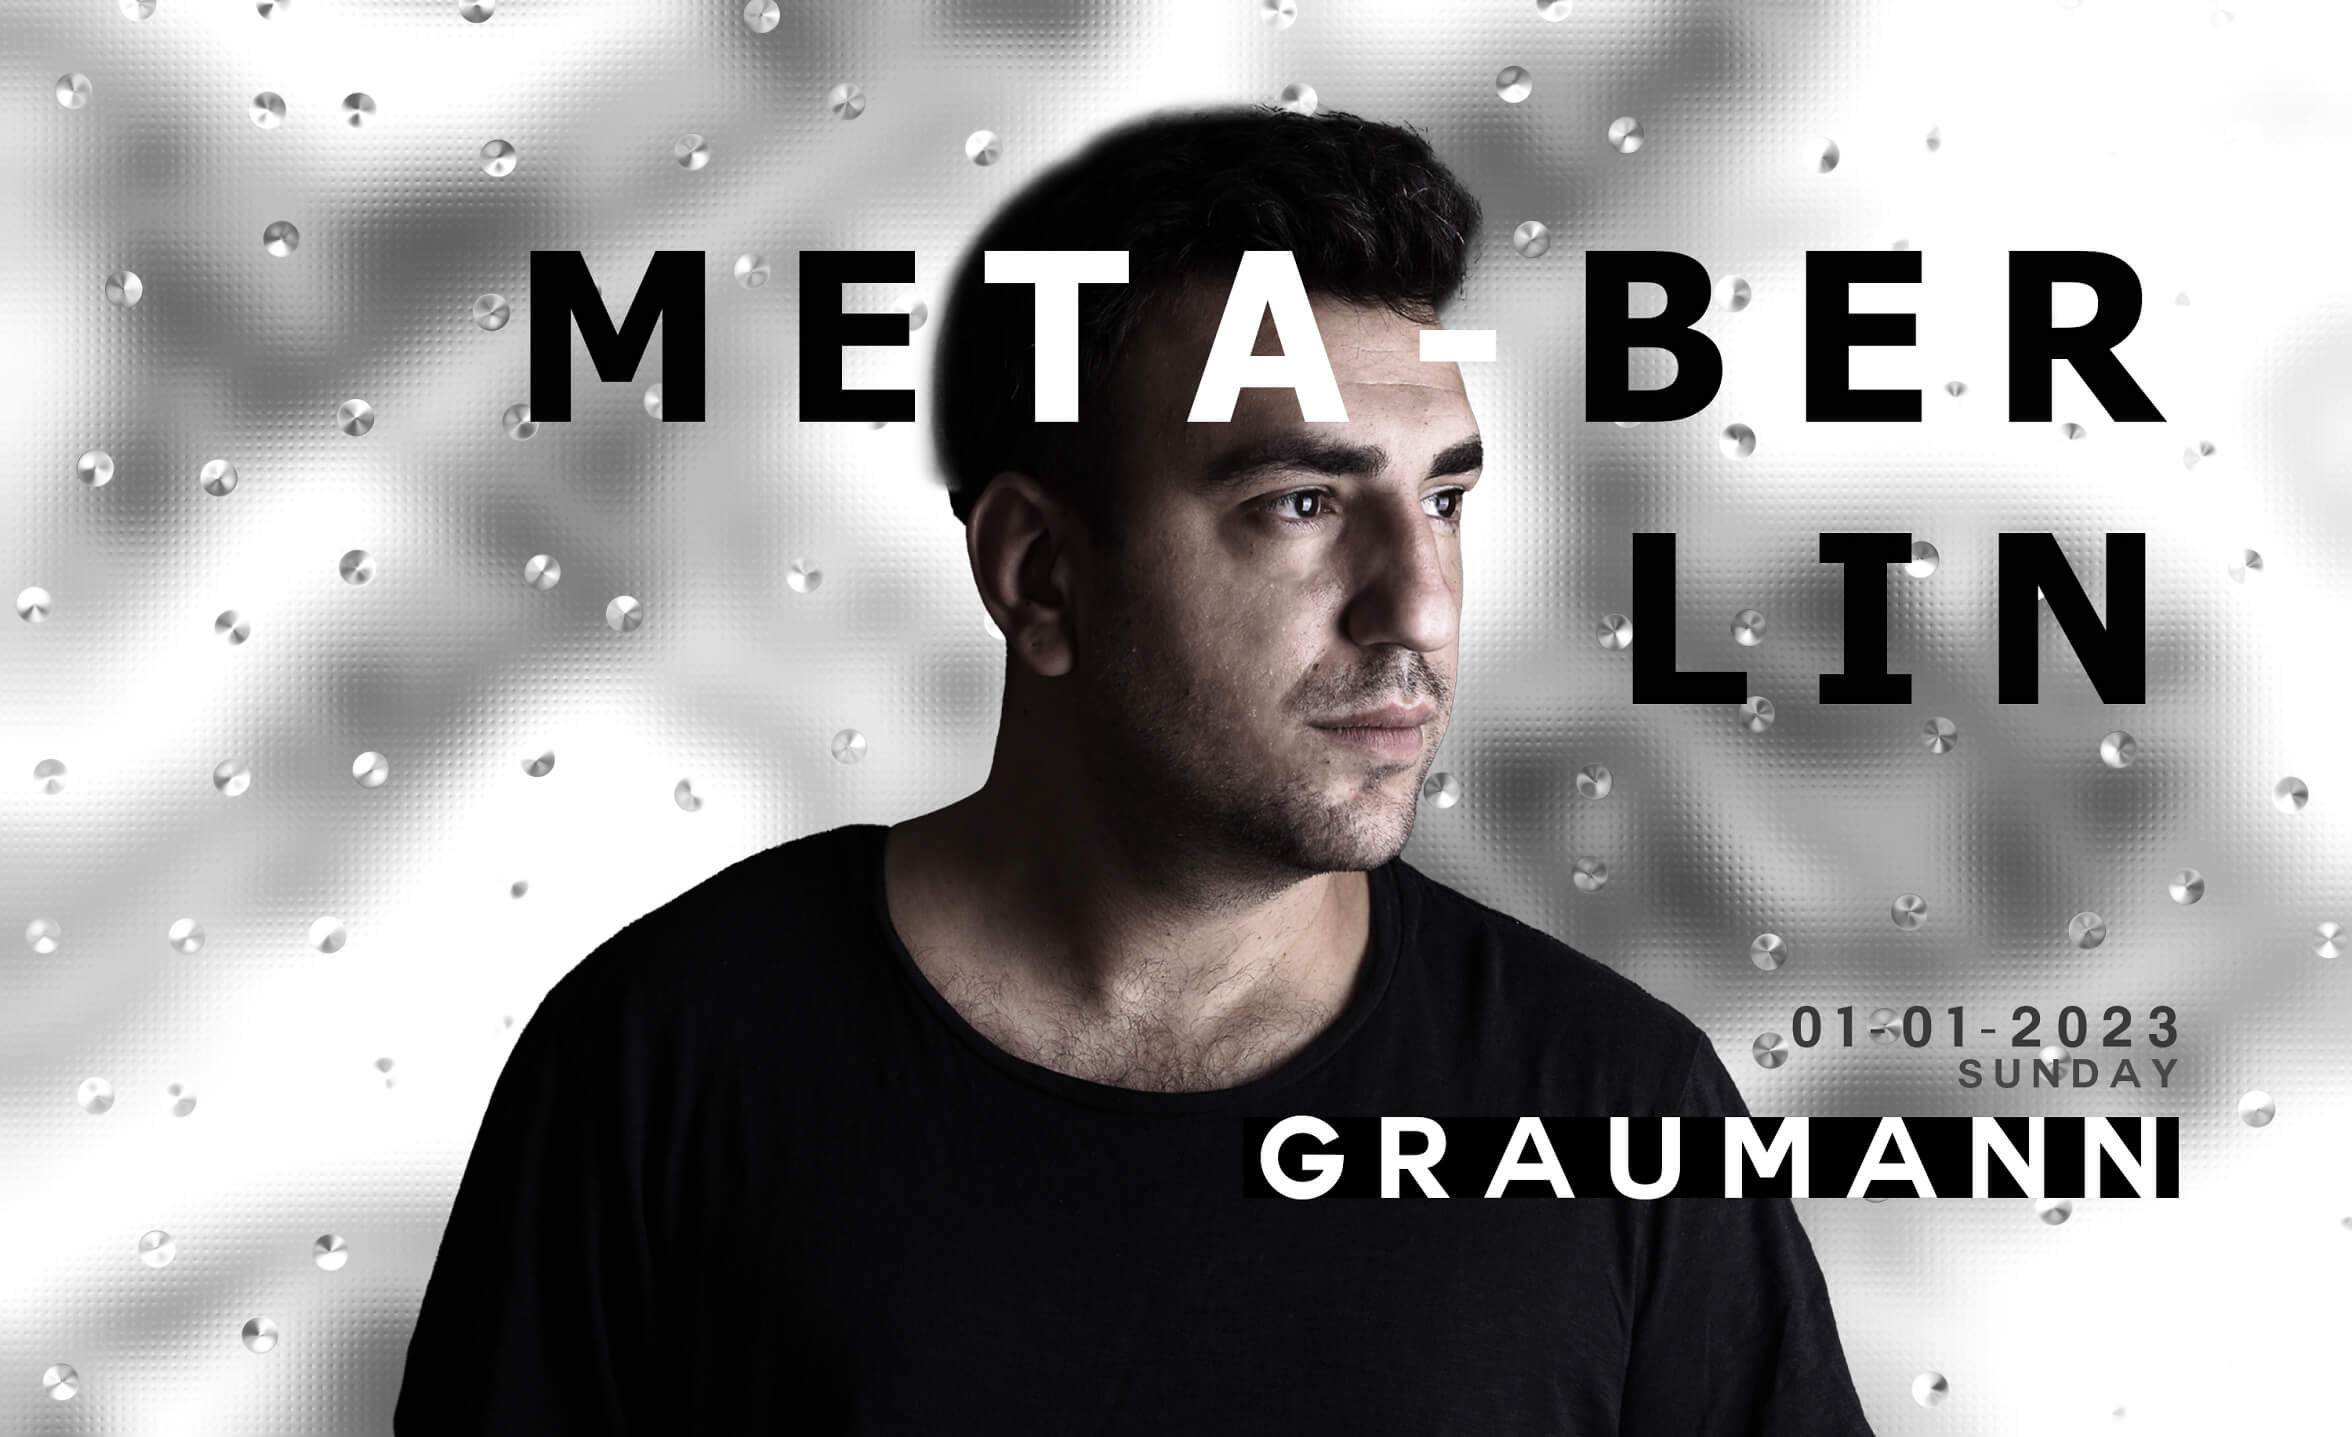 Event-Image for 'Graumann at Meta-Berlin'